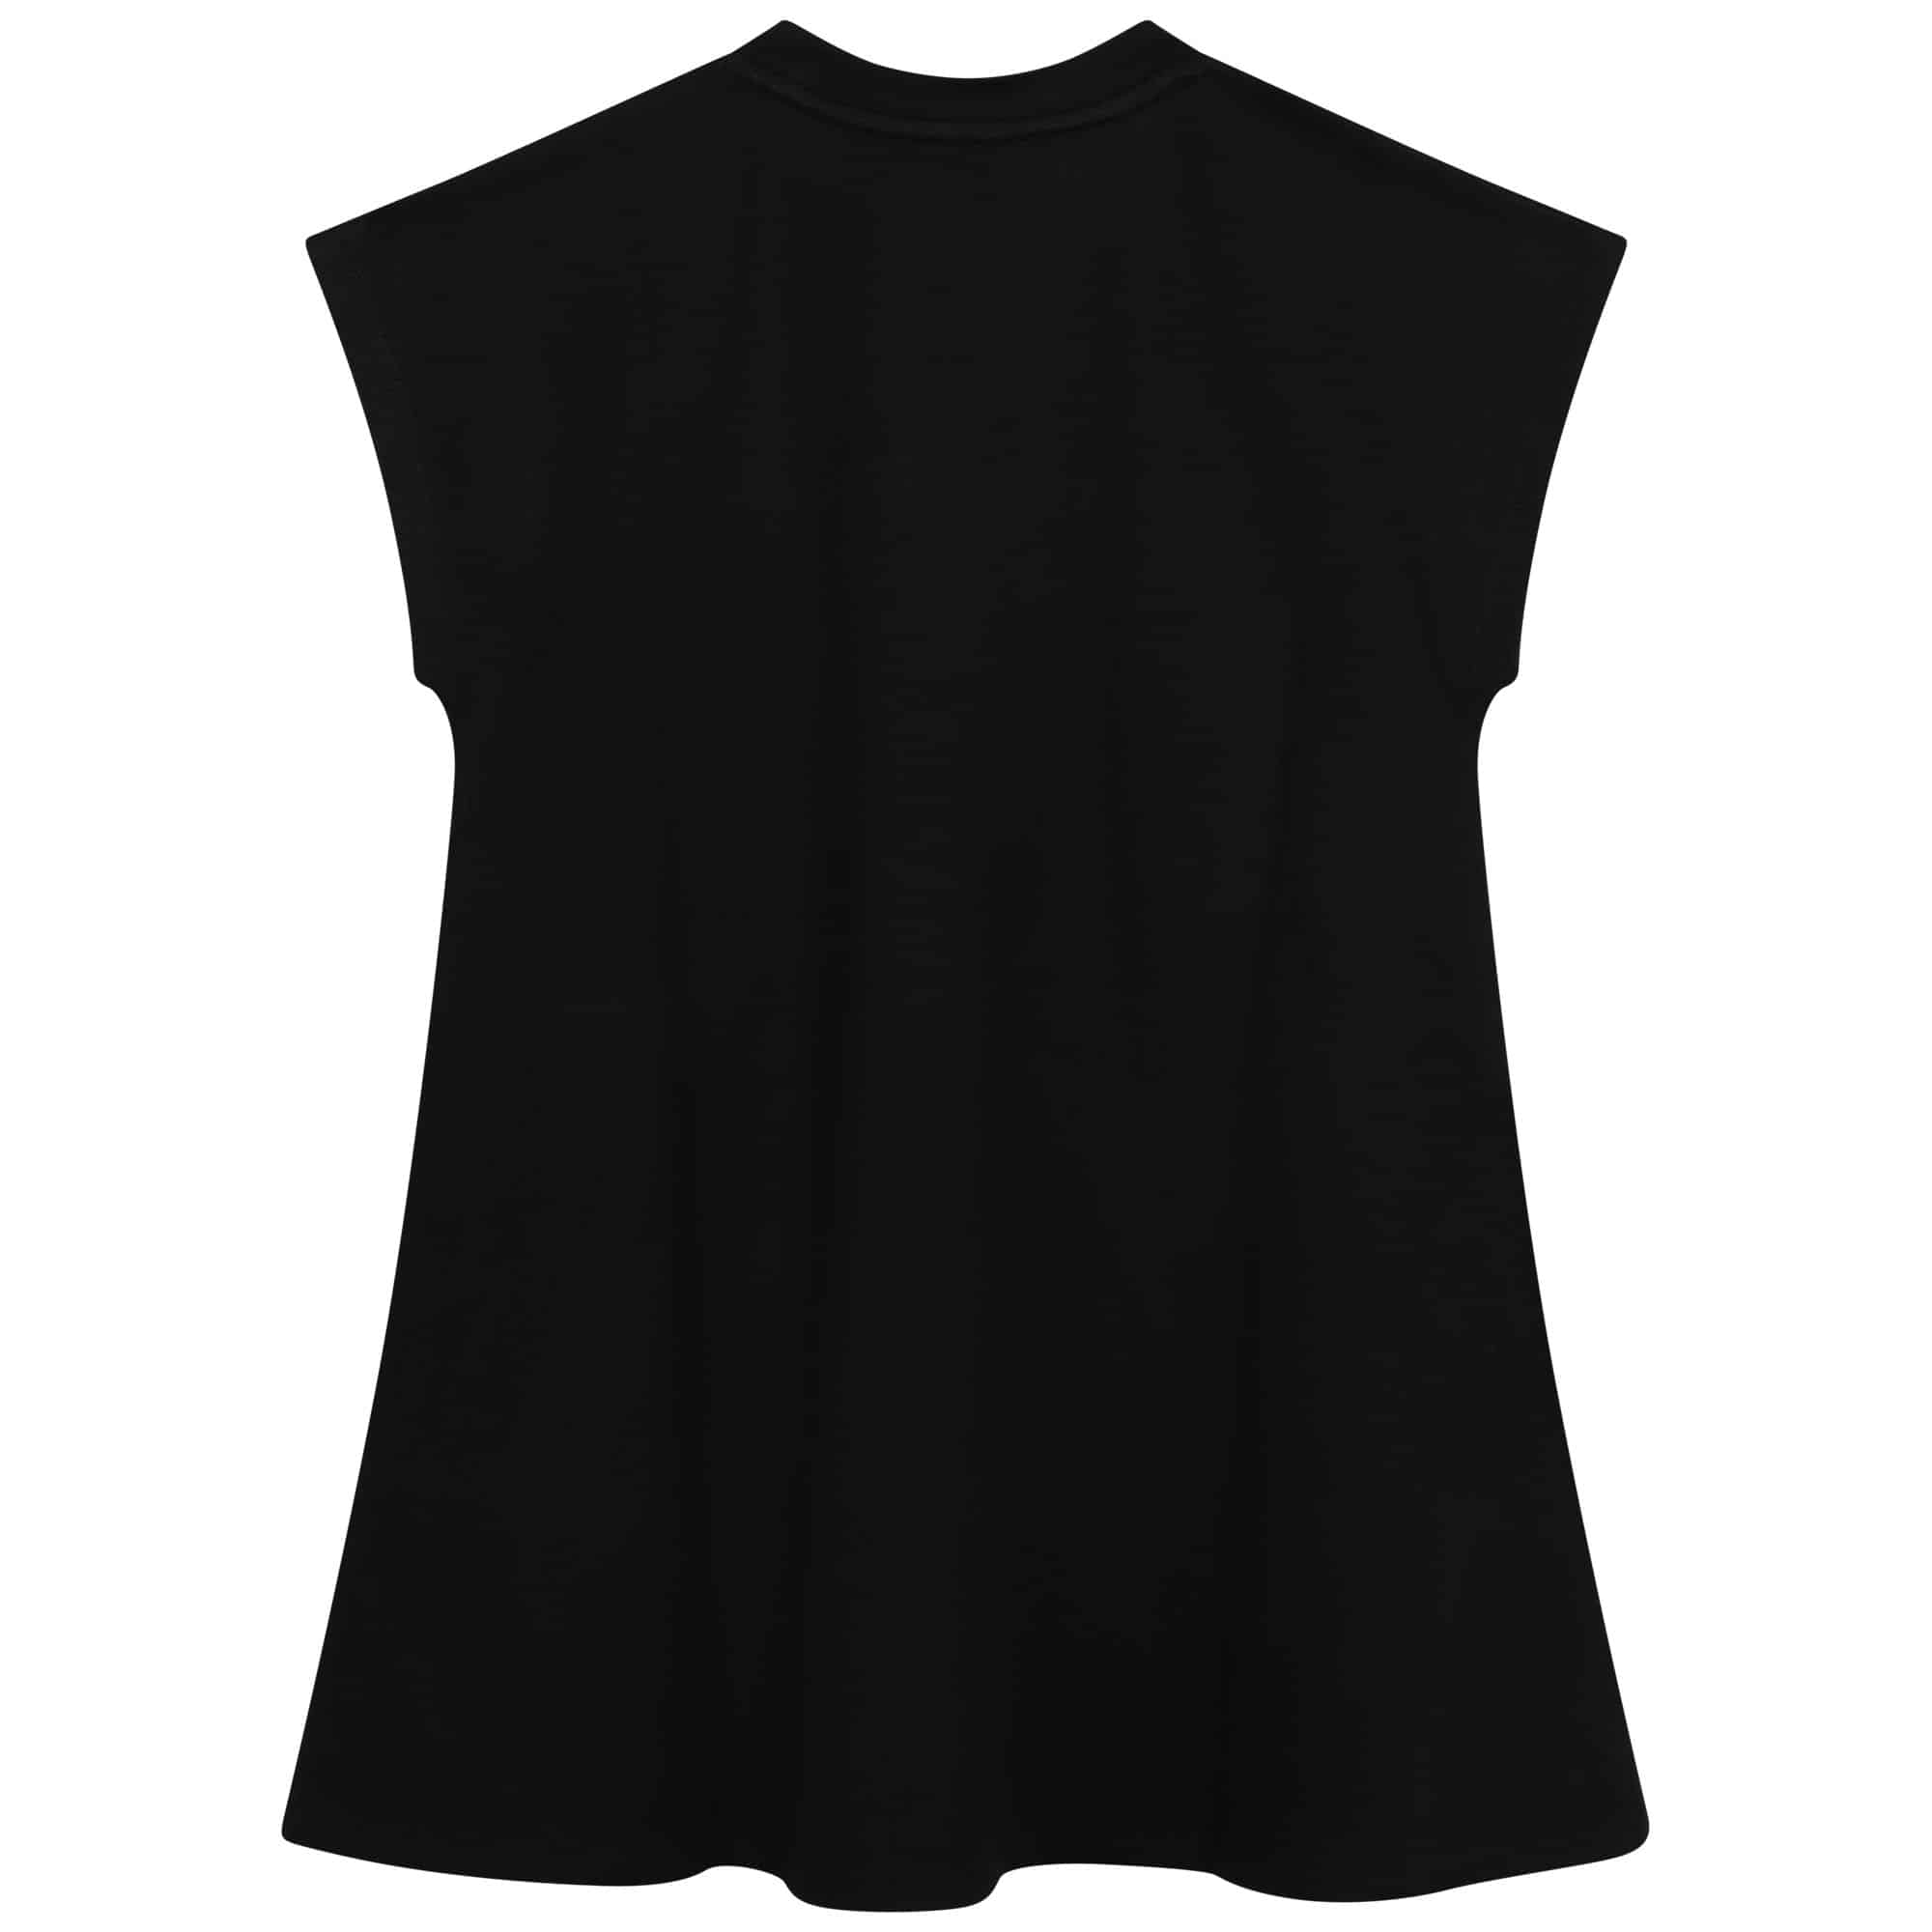 DKNY girls black dress with logo back